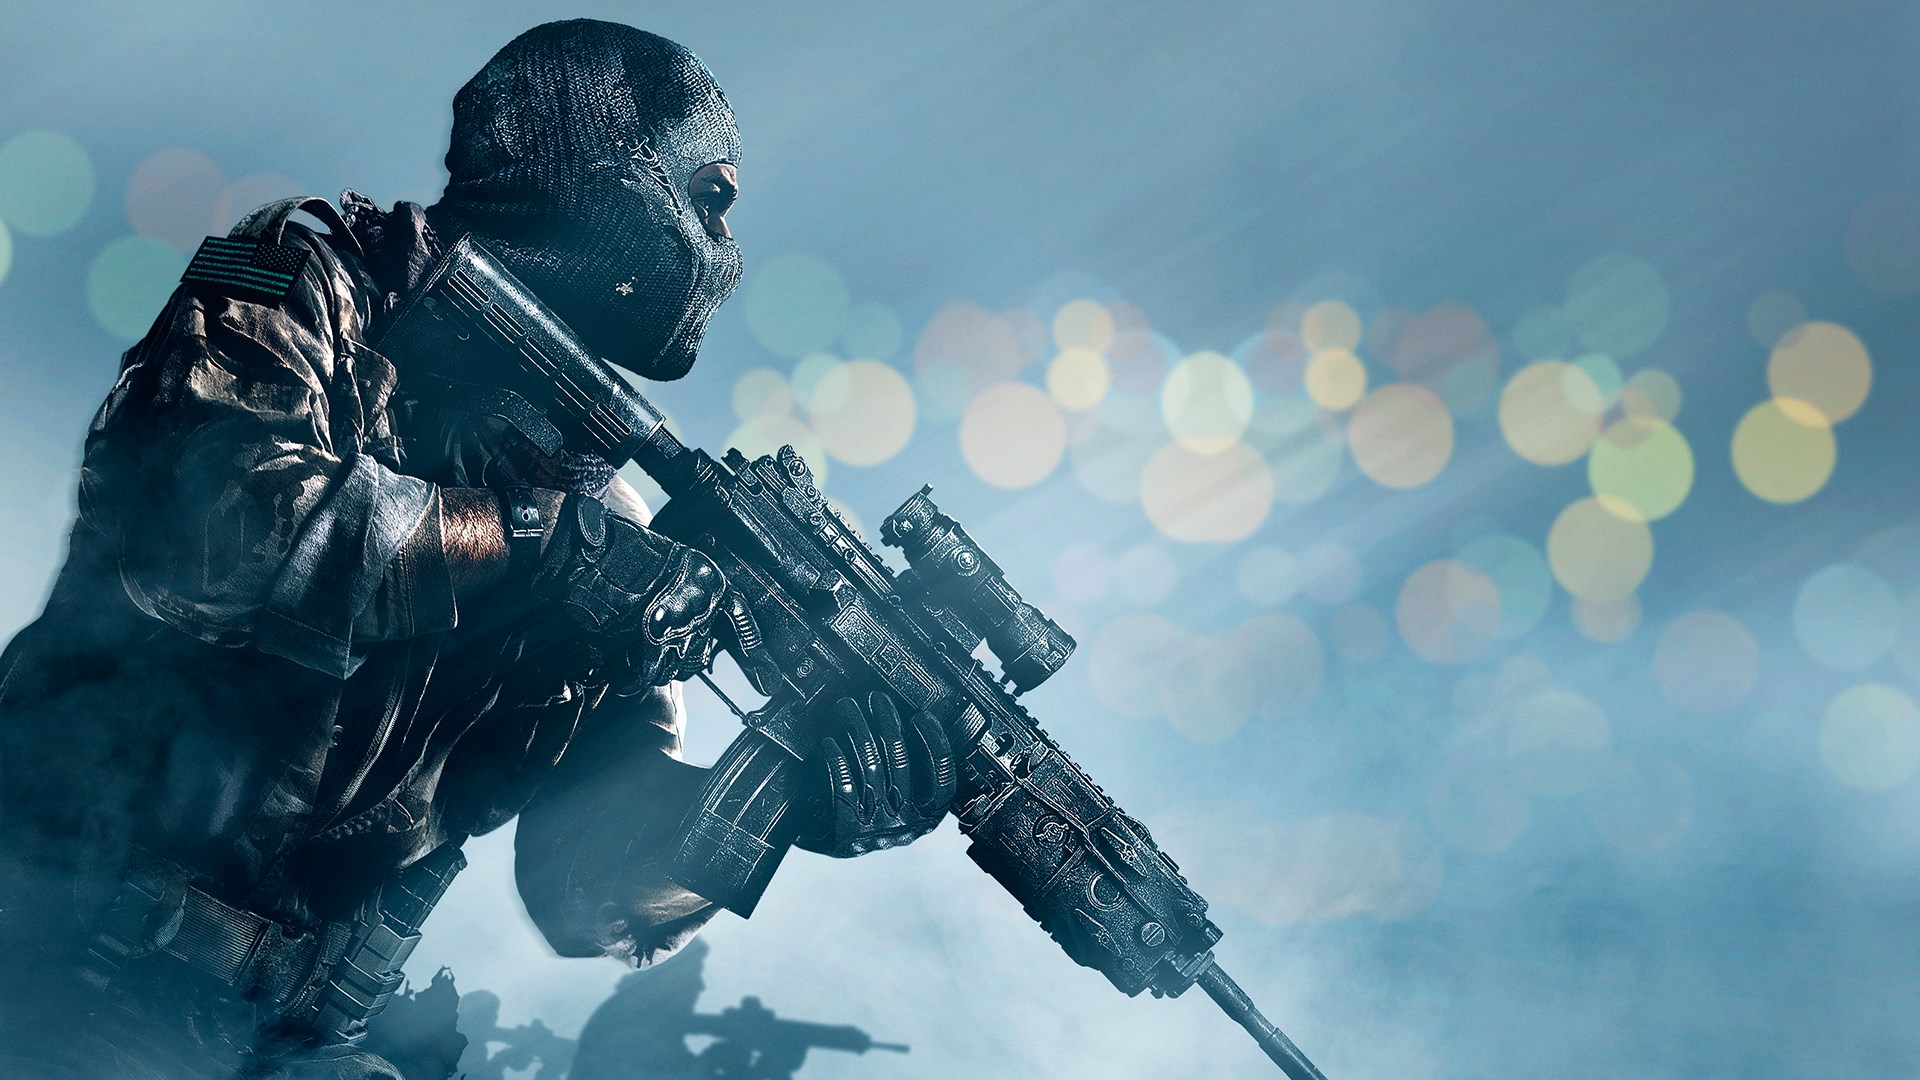 HD wallpaper: Call of Duty Ghost digital wallpaper, Call of Duty: Ghosts,  video games